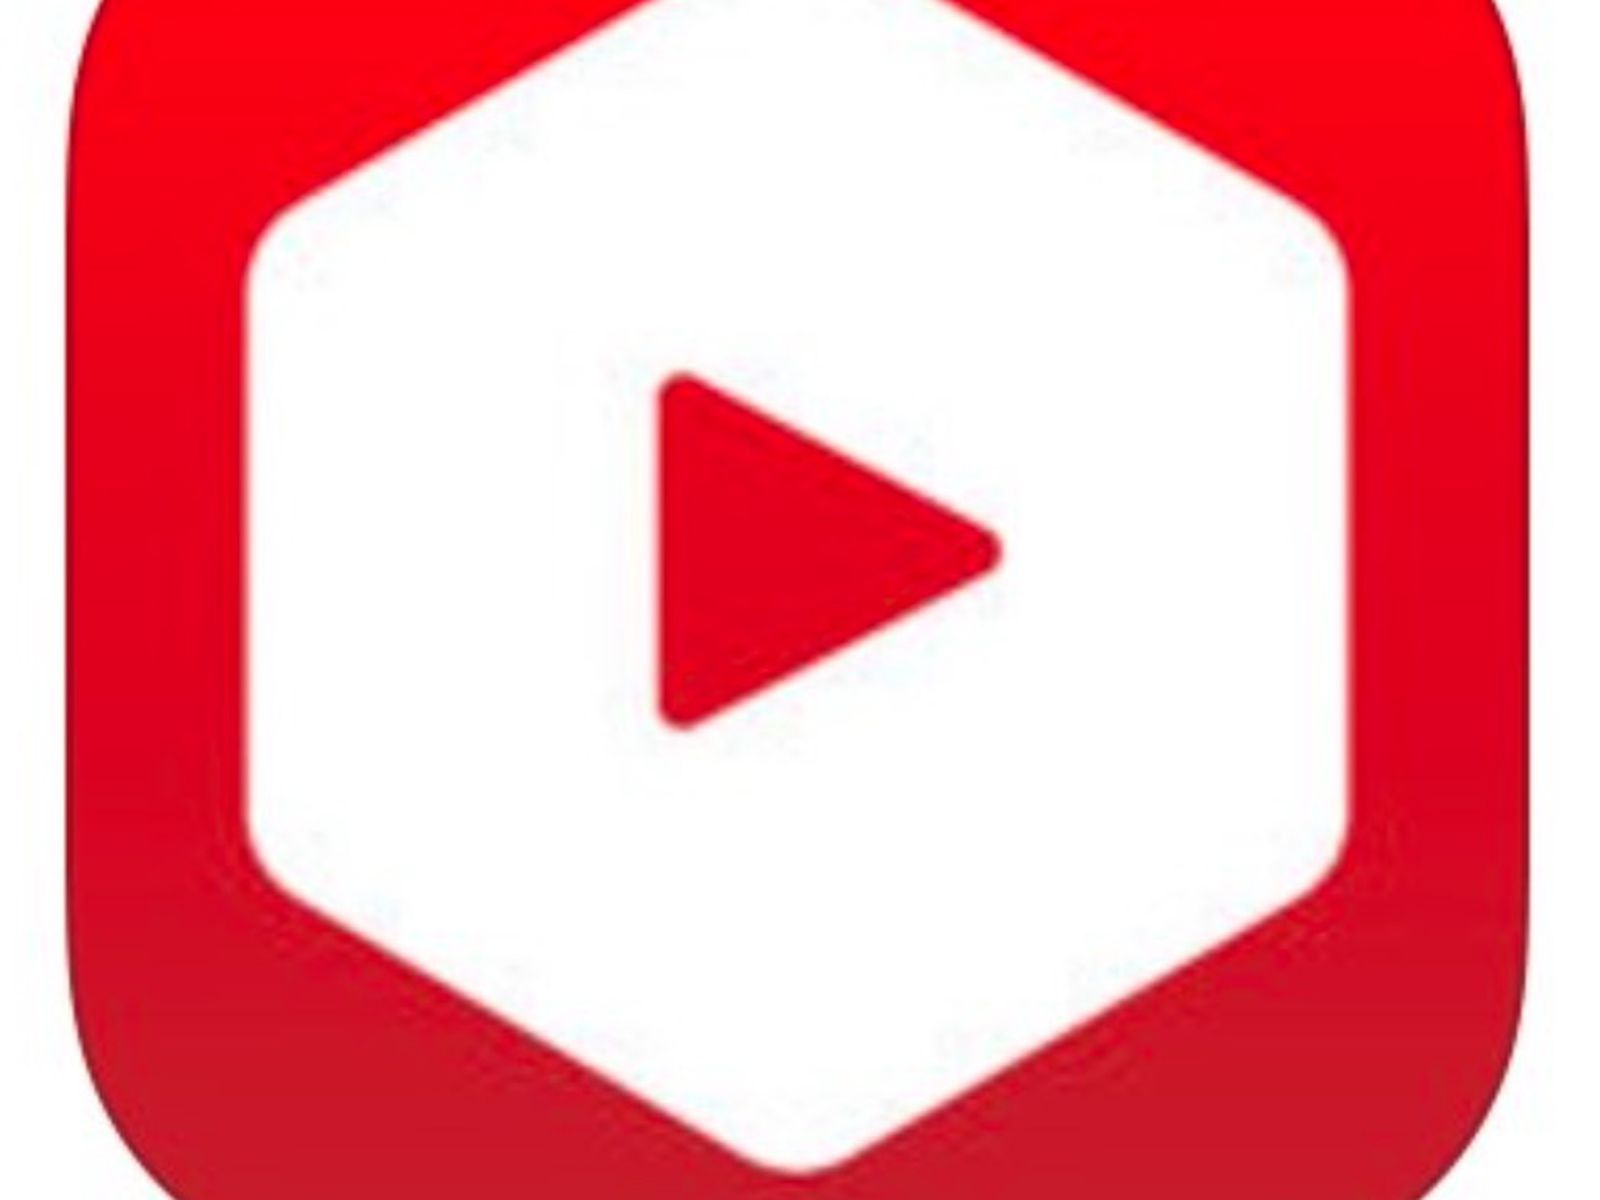 heartbeat youtube for mac